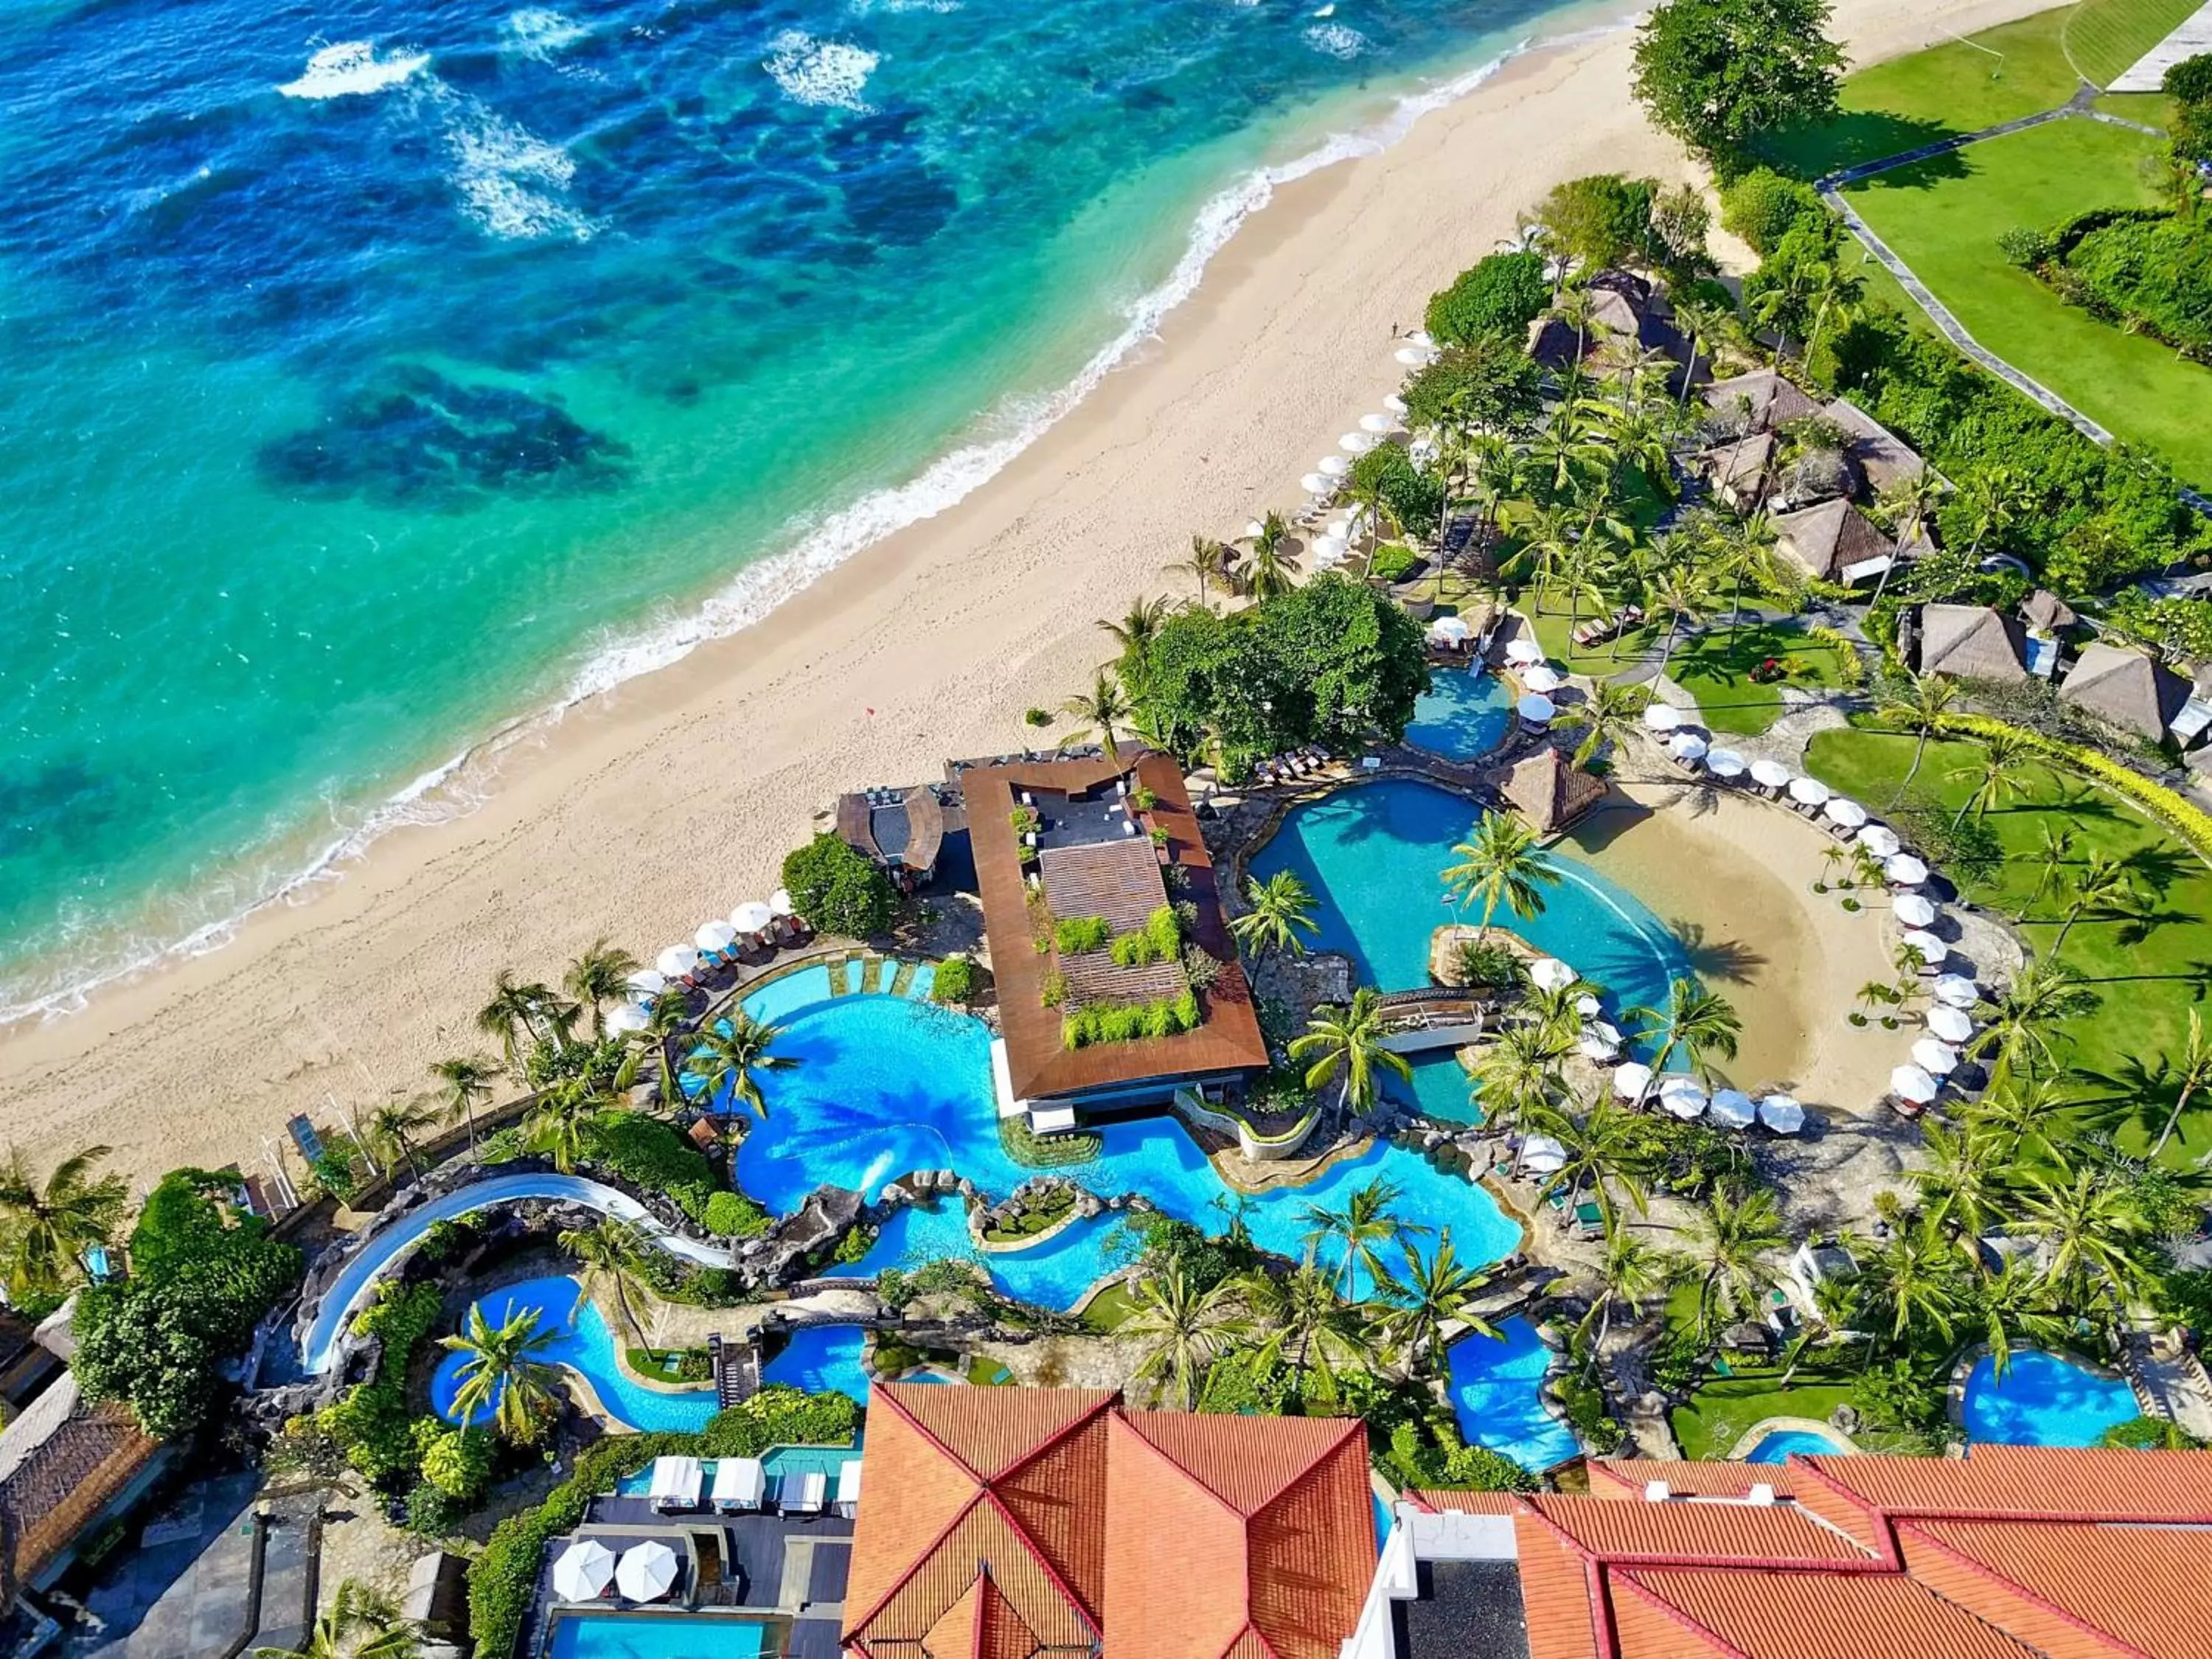 Pool view, Bird's-eye View in Hilton Bali Resort